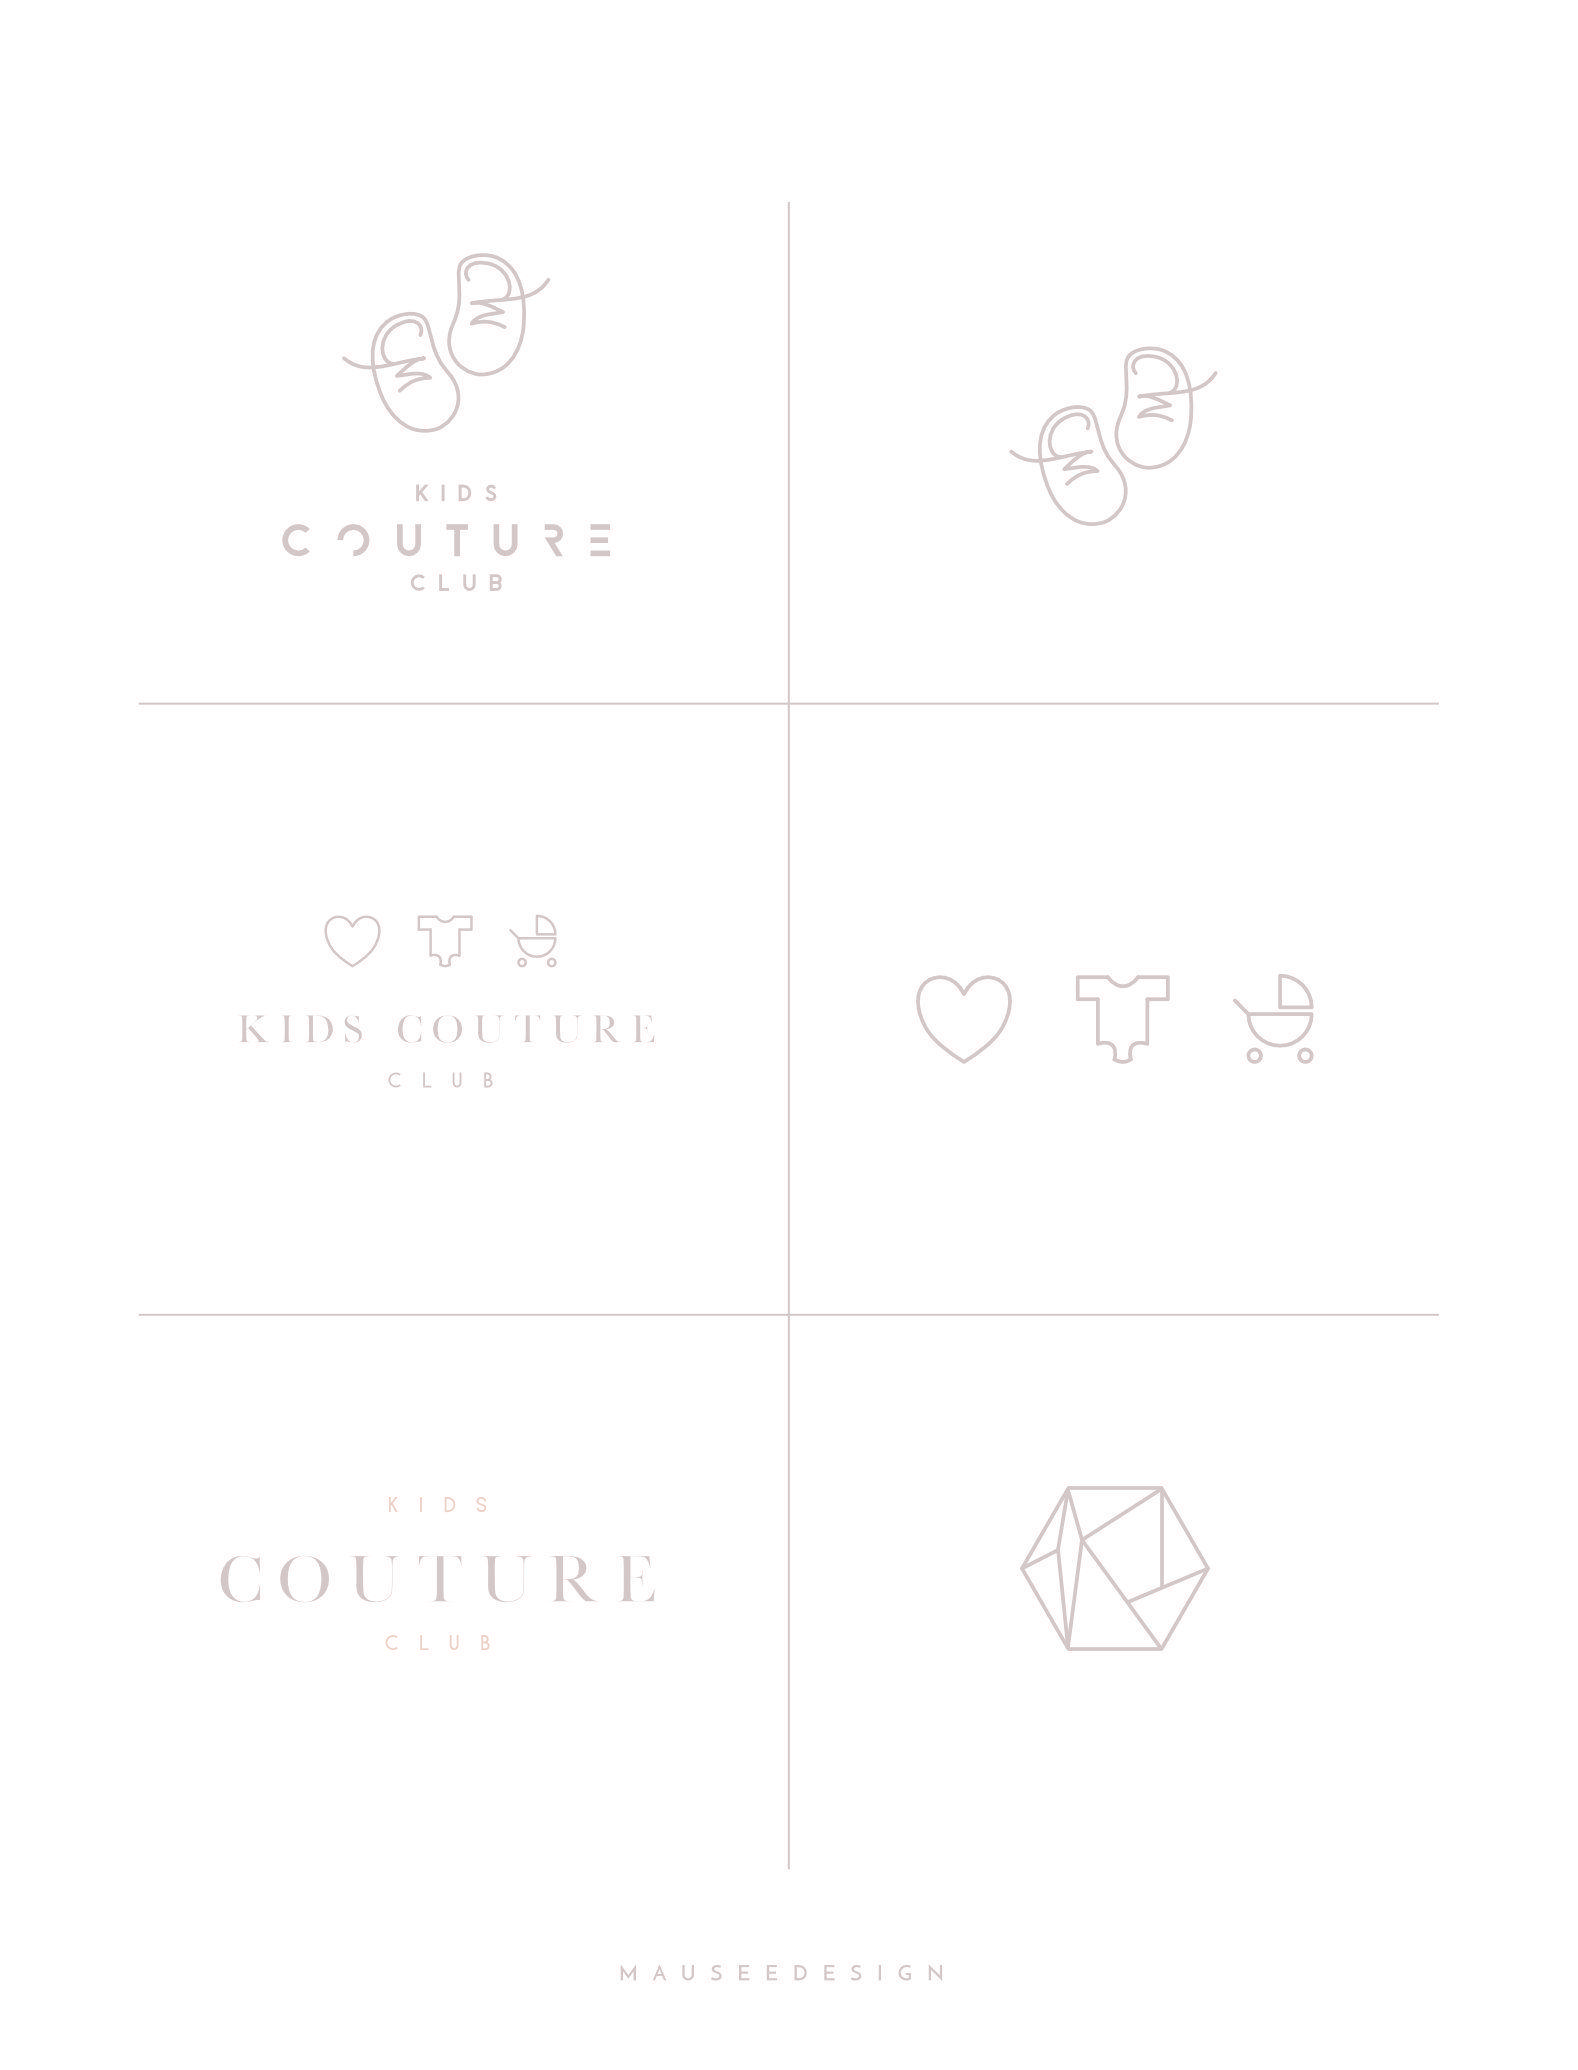 Couture Club Logo - LogoDix